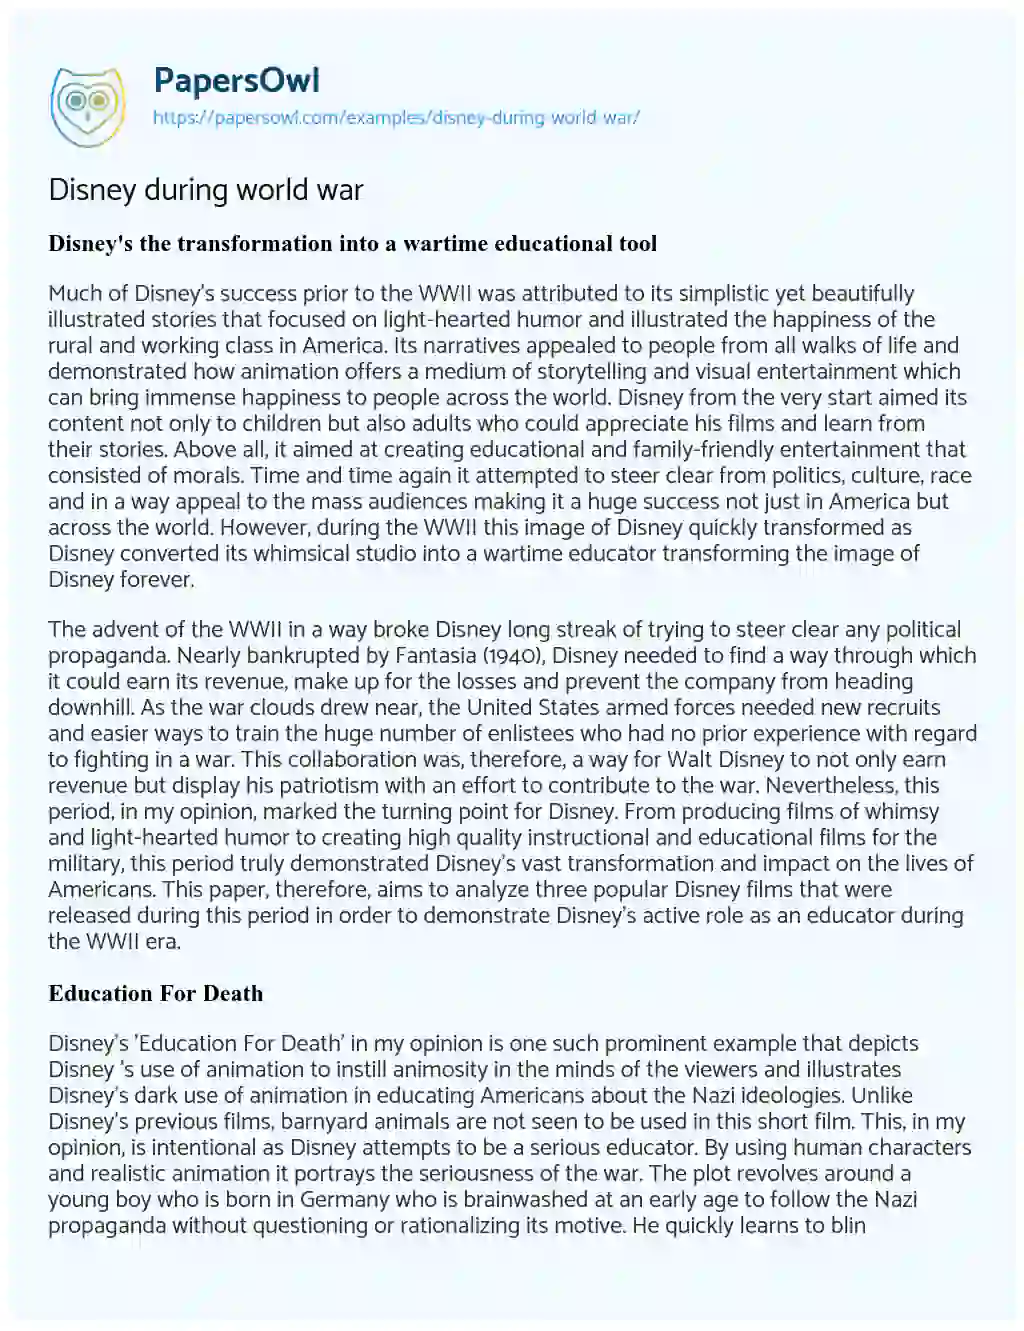 Essay on Disney during World War